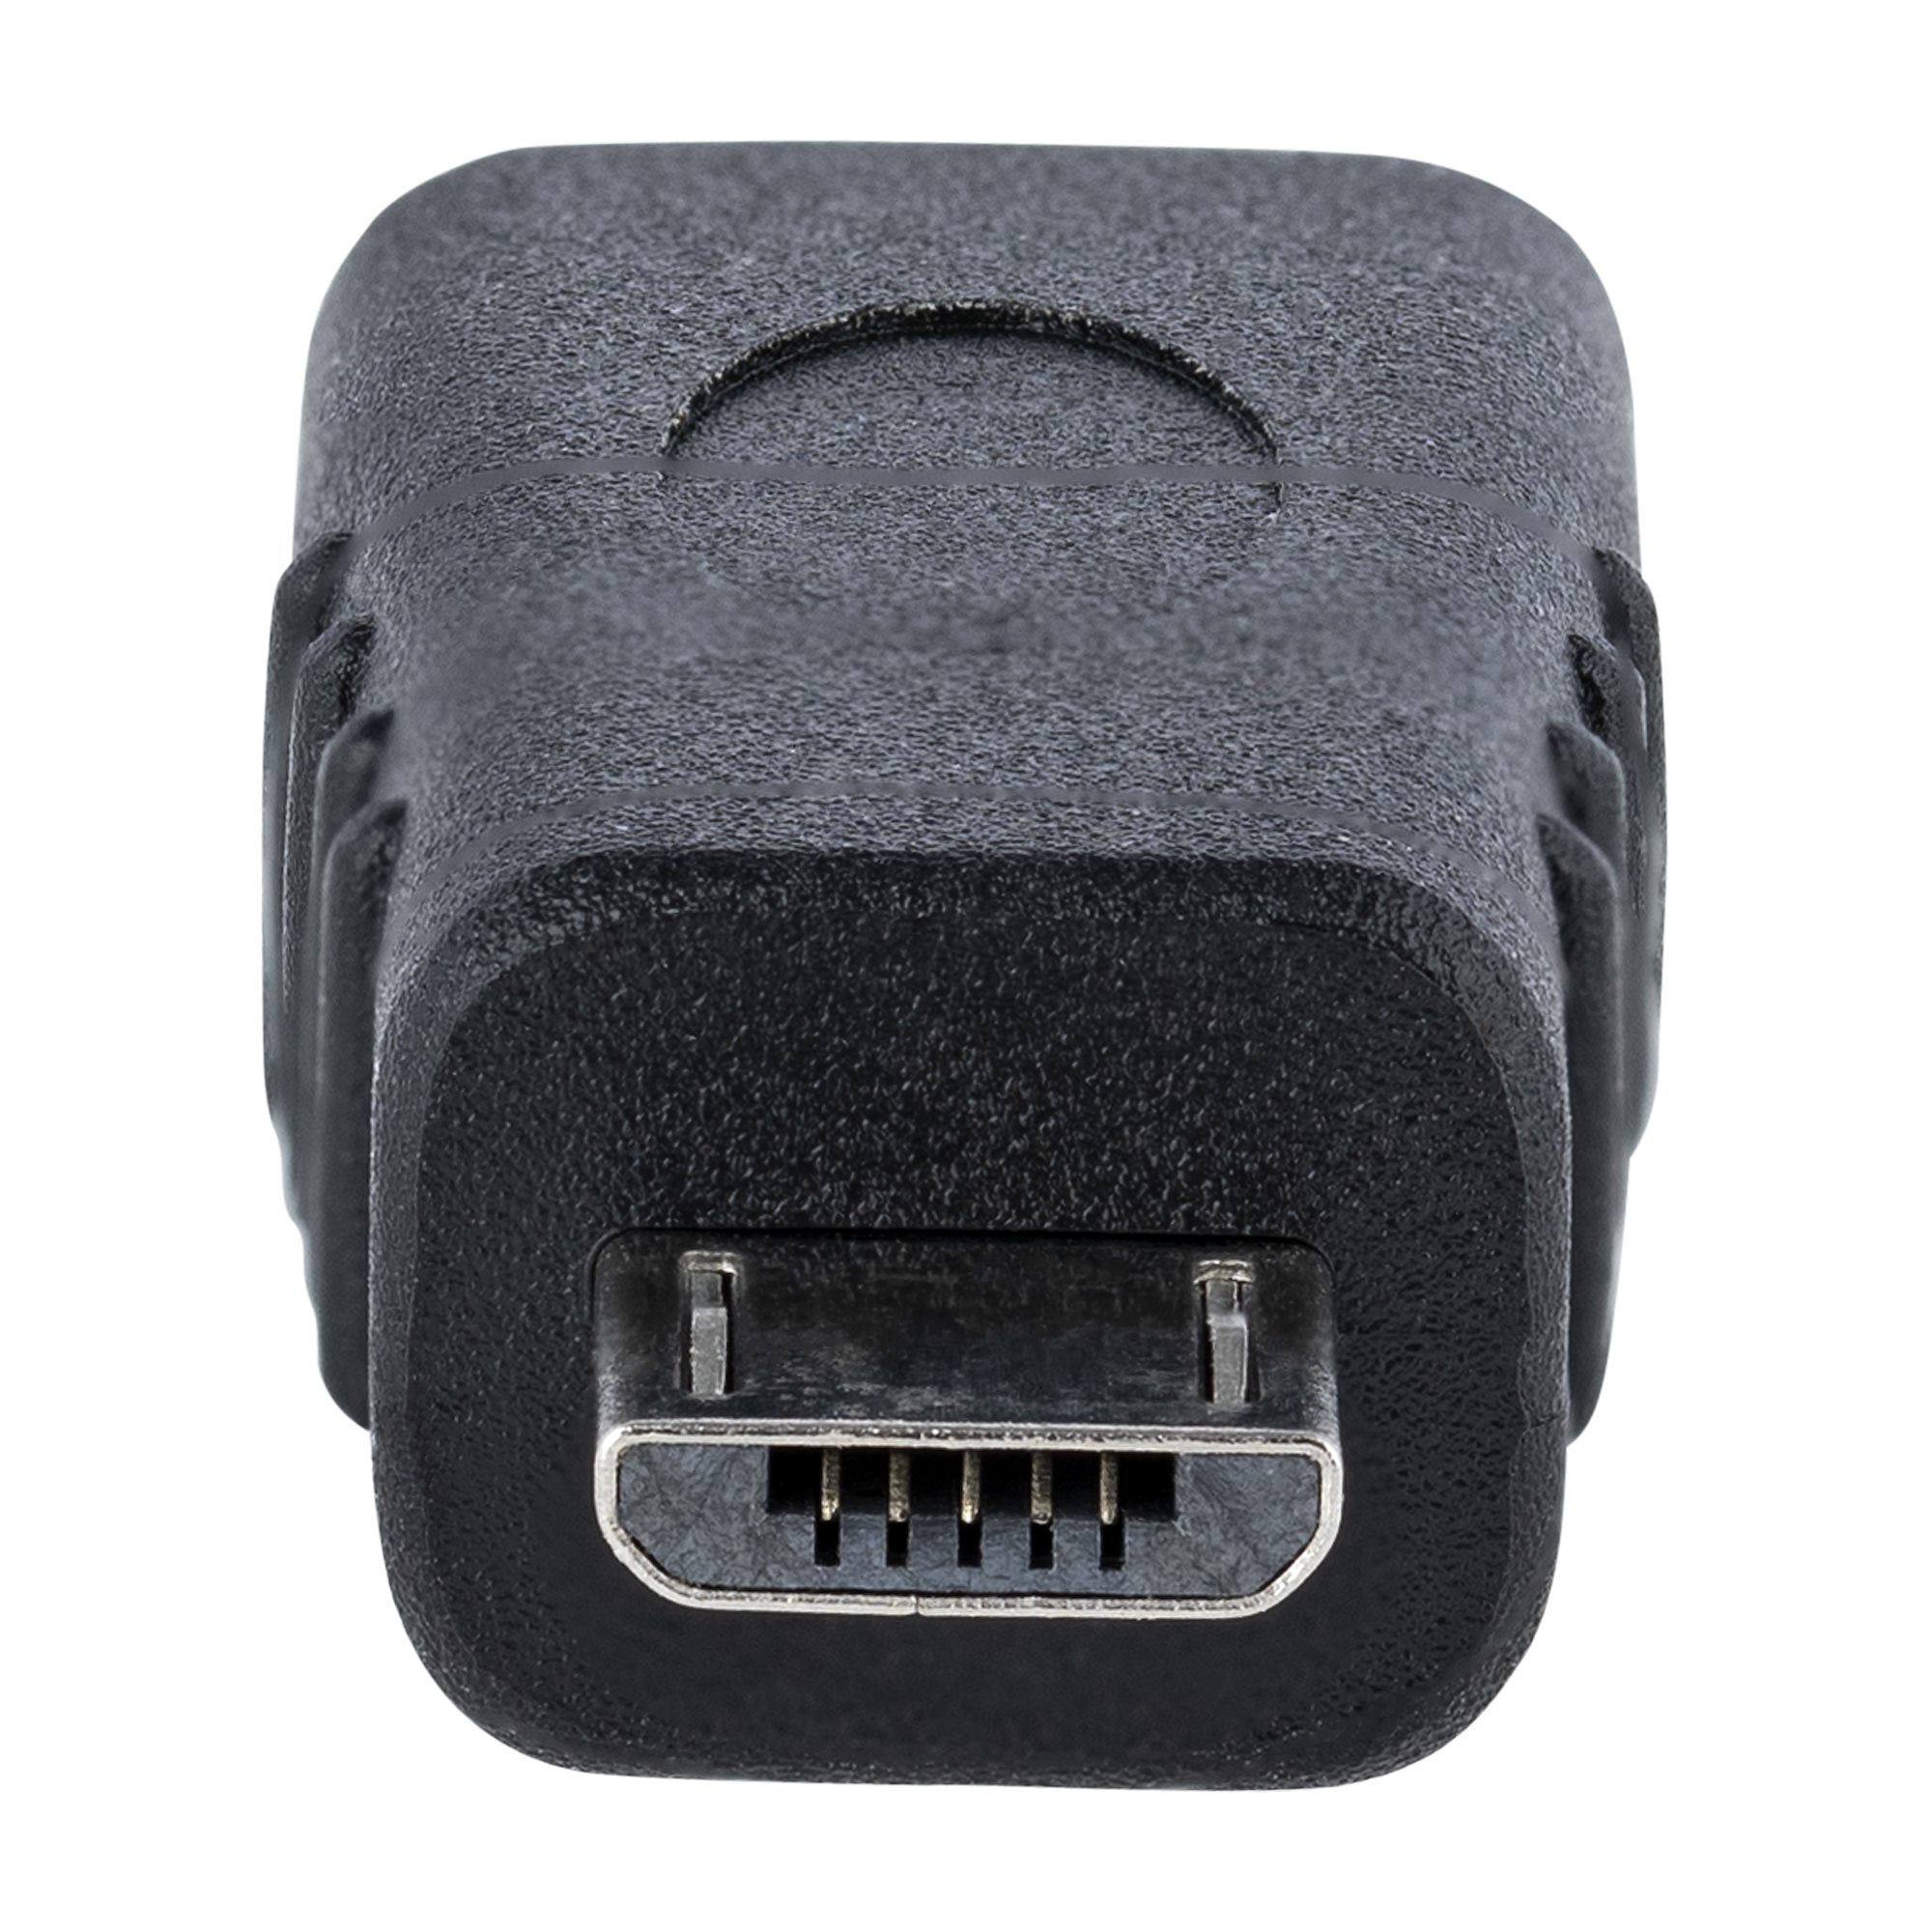 Micro USB to Mini USB 2.0 Adapter M/F - Micro USB Cables